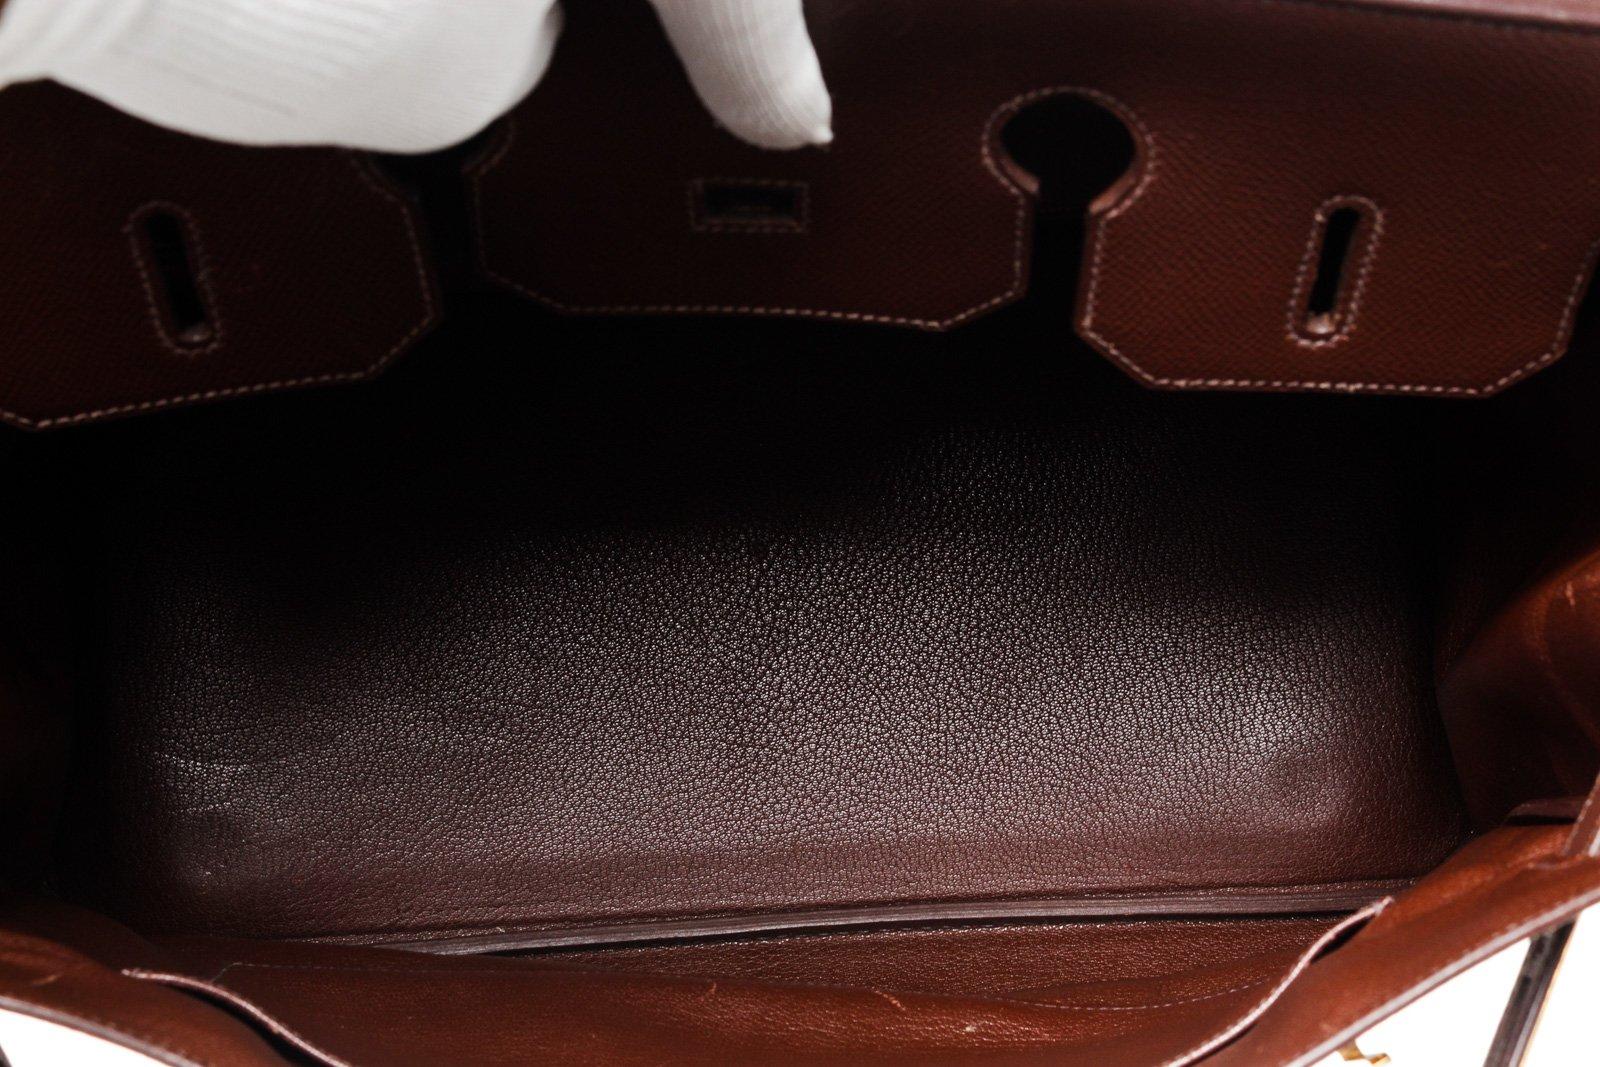 Hermes Brown Leather Birkin 35cm Satchel Bag with leather, gold-tone hardware, trim leather, interior slip pocket, dual top handle and turn lock closure.

47182MSC